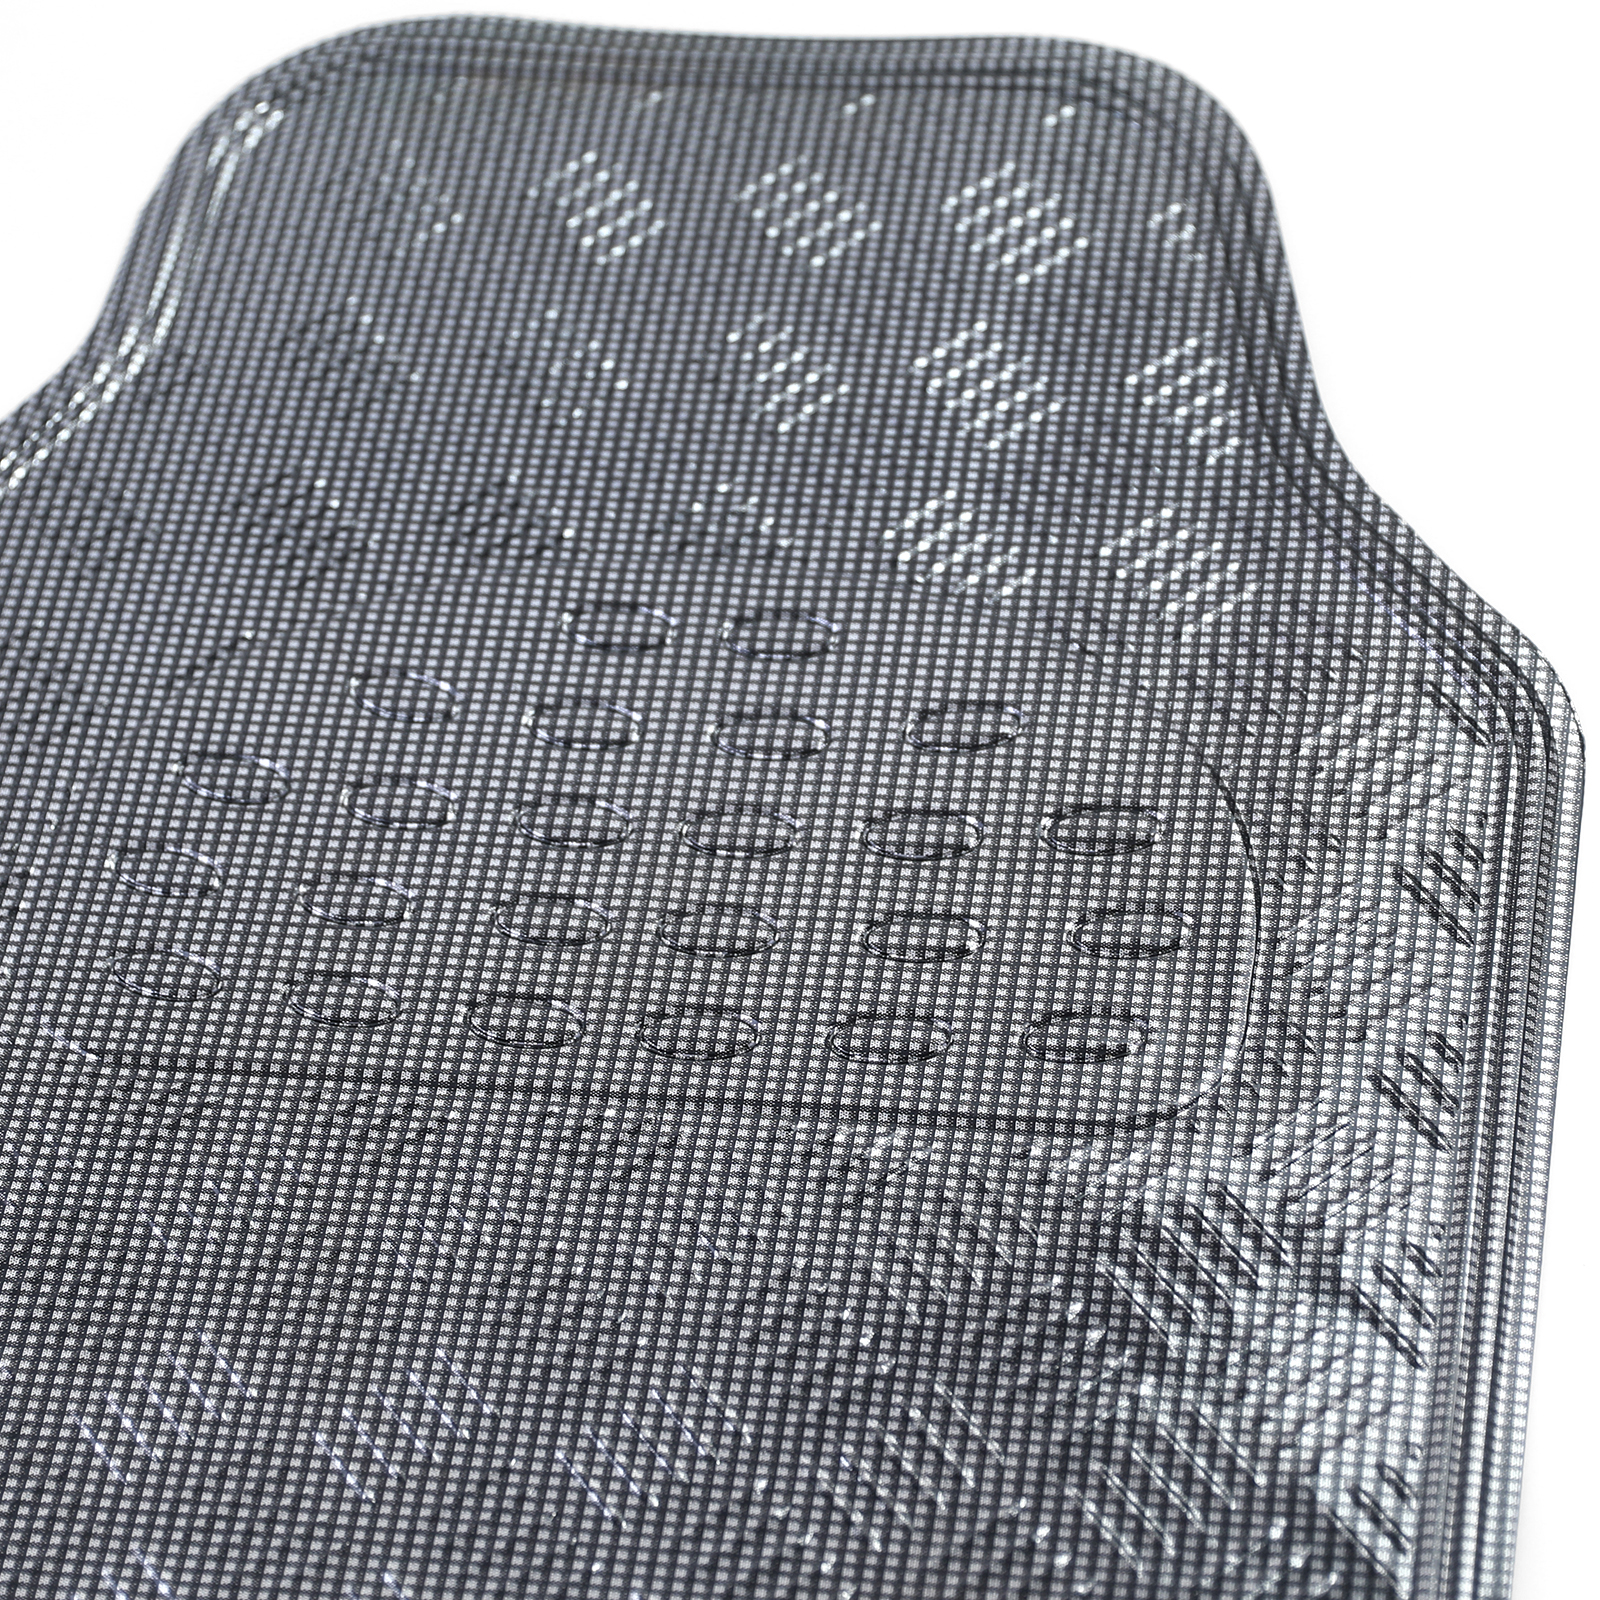 Auto Gummi Fußmatten universal Alu Riffelblech Optik 4-teilig Chrom Carbon  kaufen